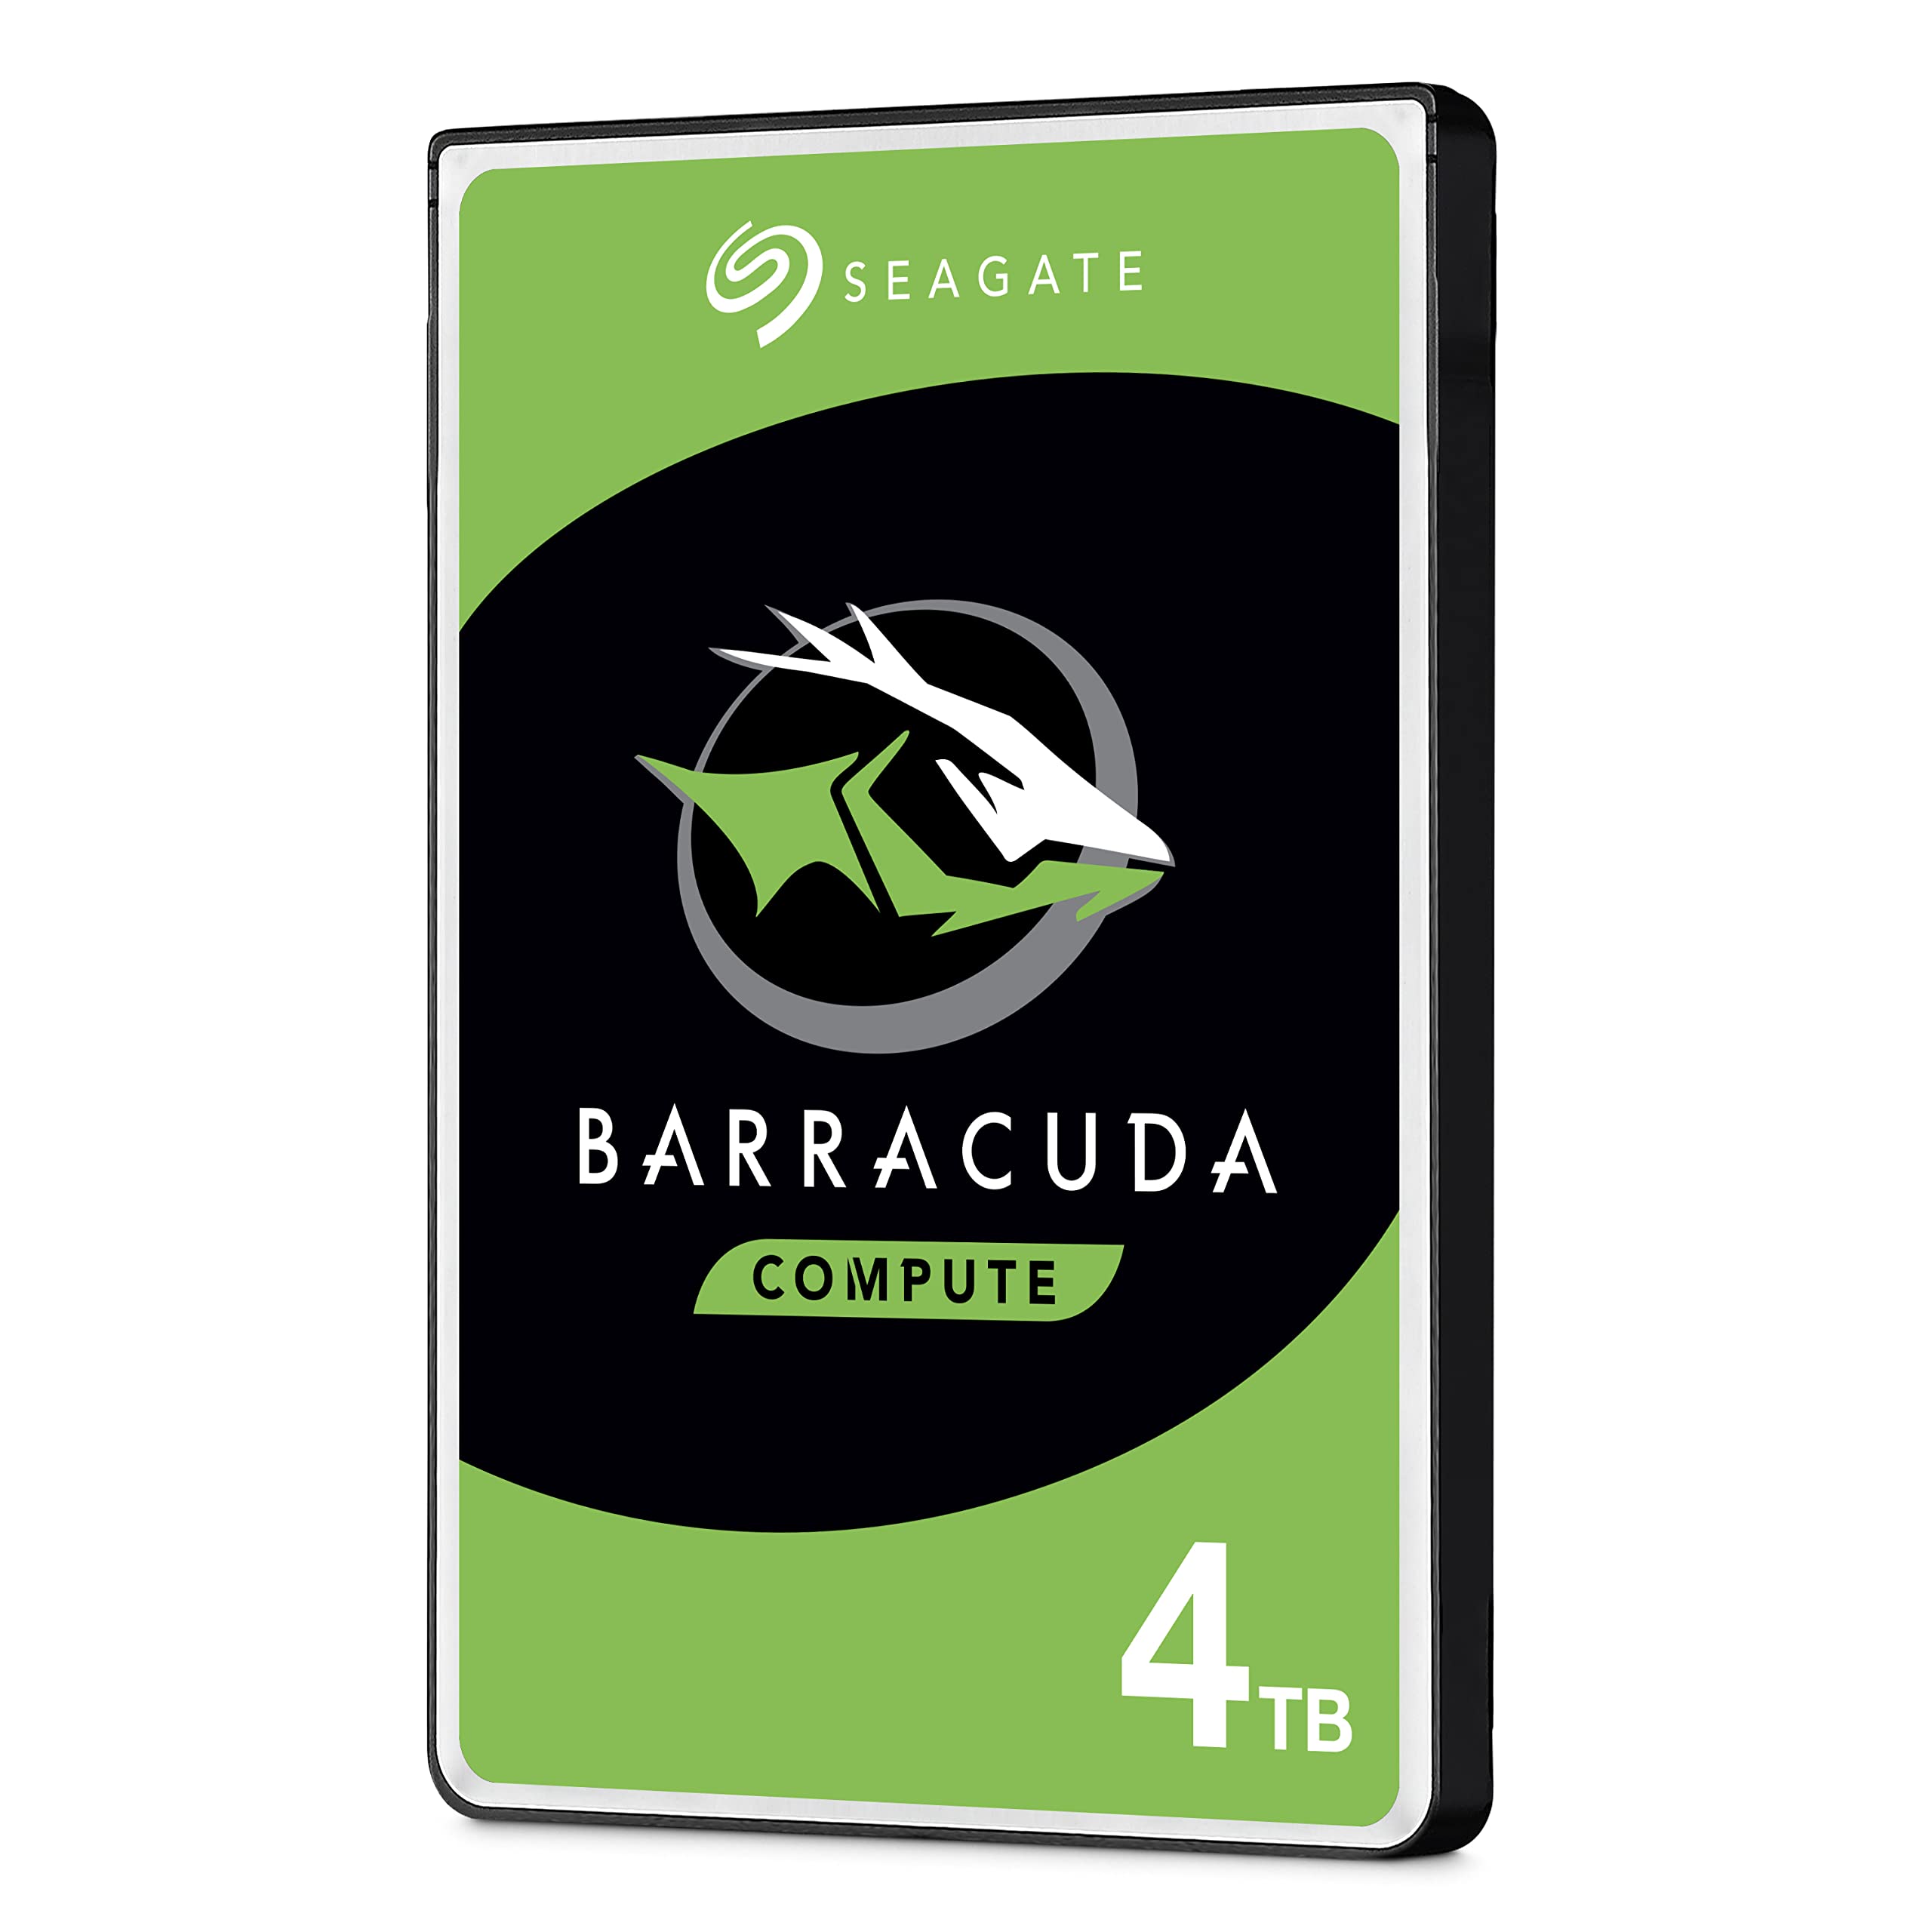 Seagate Barracuda 4TB interne Festplatte HDD, 2.5 Zoll, 5400 U/Min, 128 MB Cache, SATA 6GB/s, silber, Modellnr.: ST4000LM024